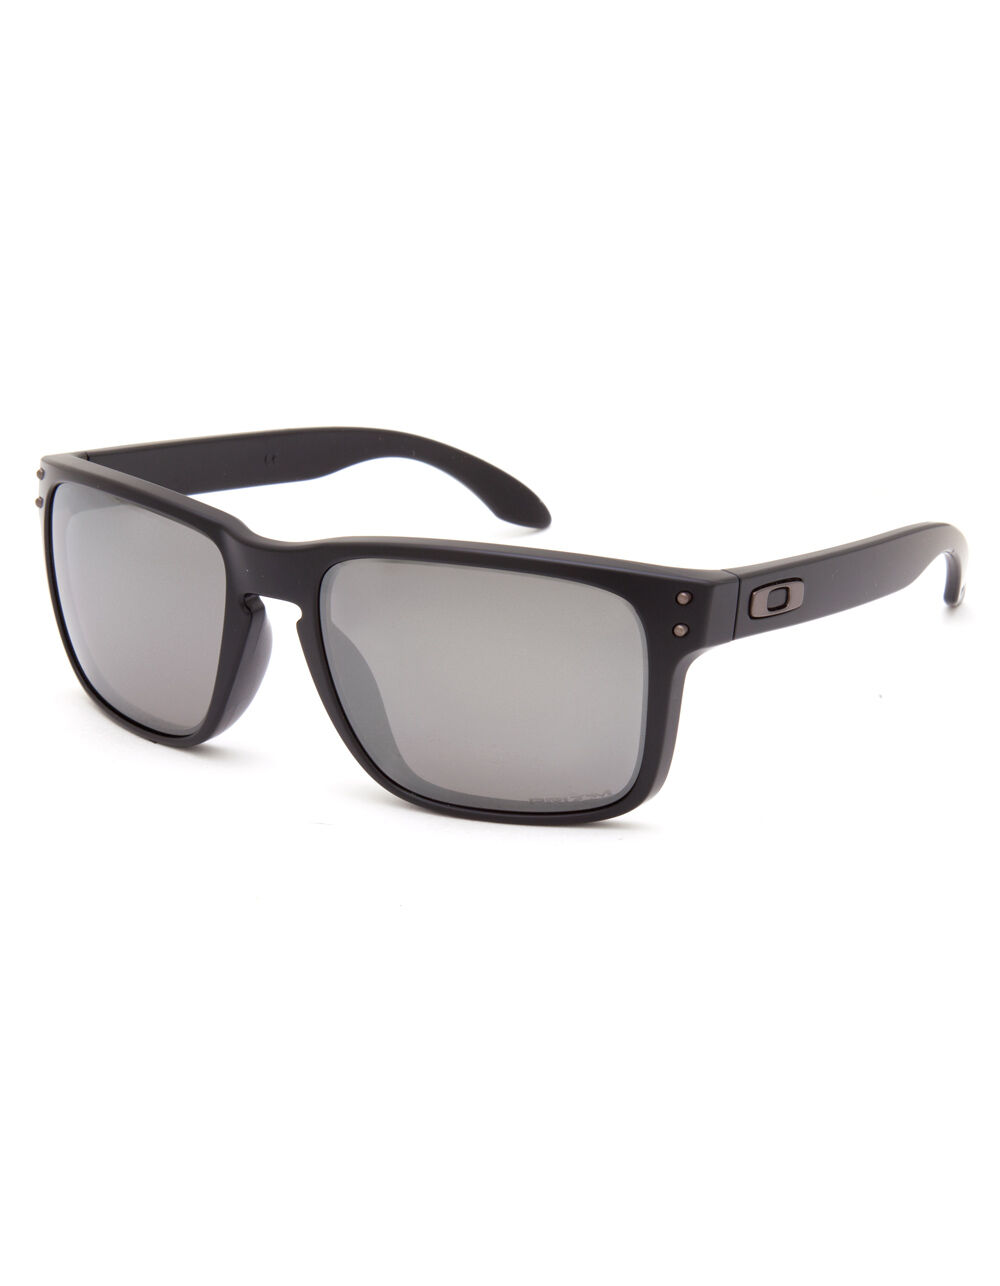 Oakley Holbrook Polarized Sunglasses - Matte Black/Prizm Black Polarized - OO9102-D6